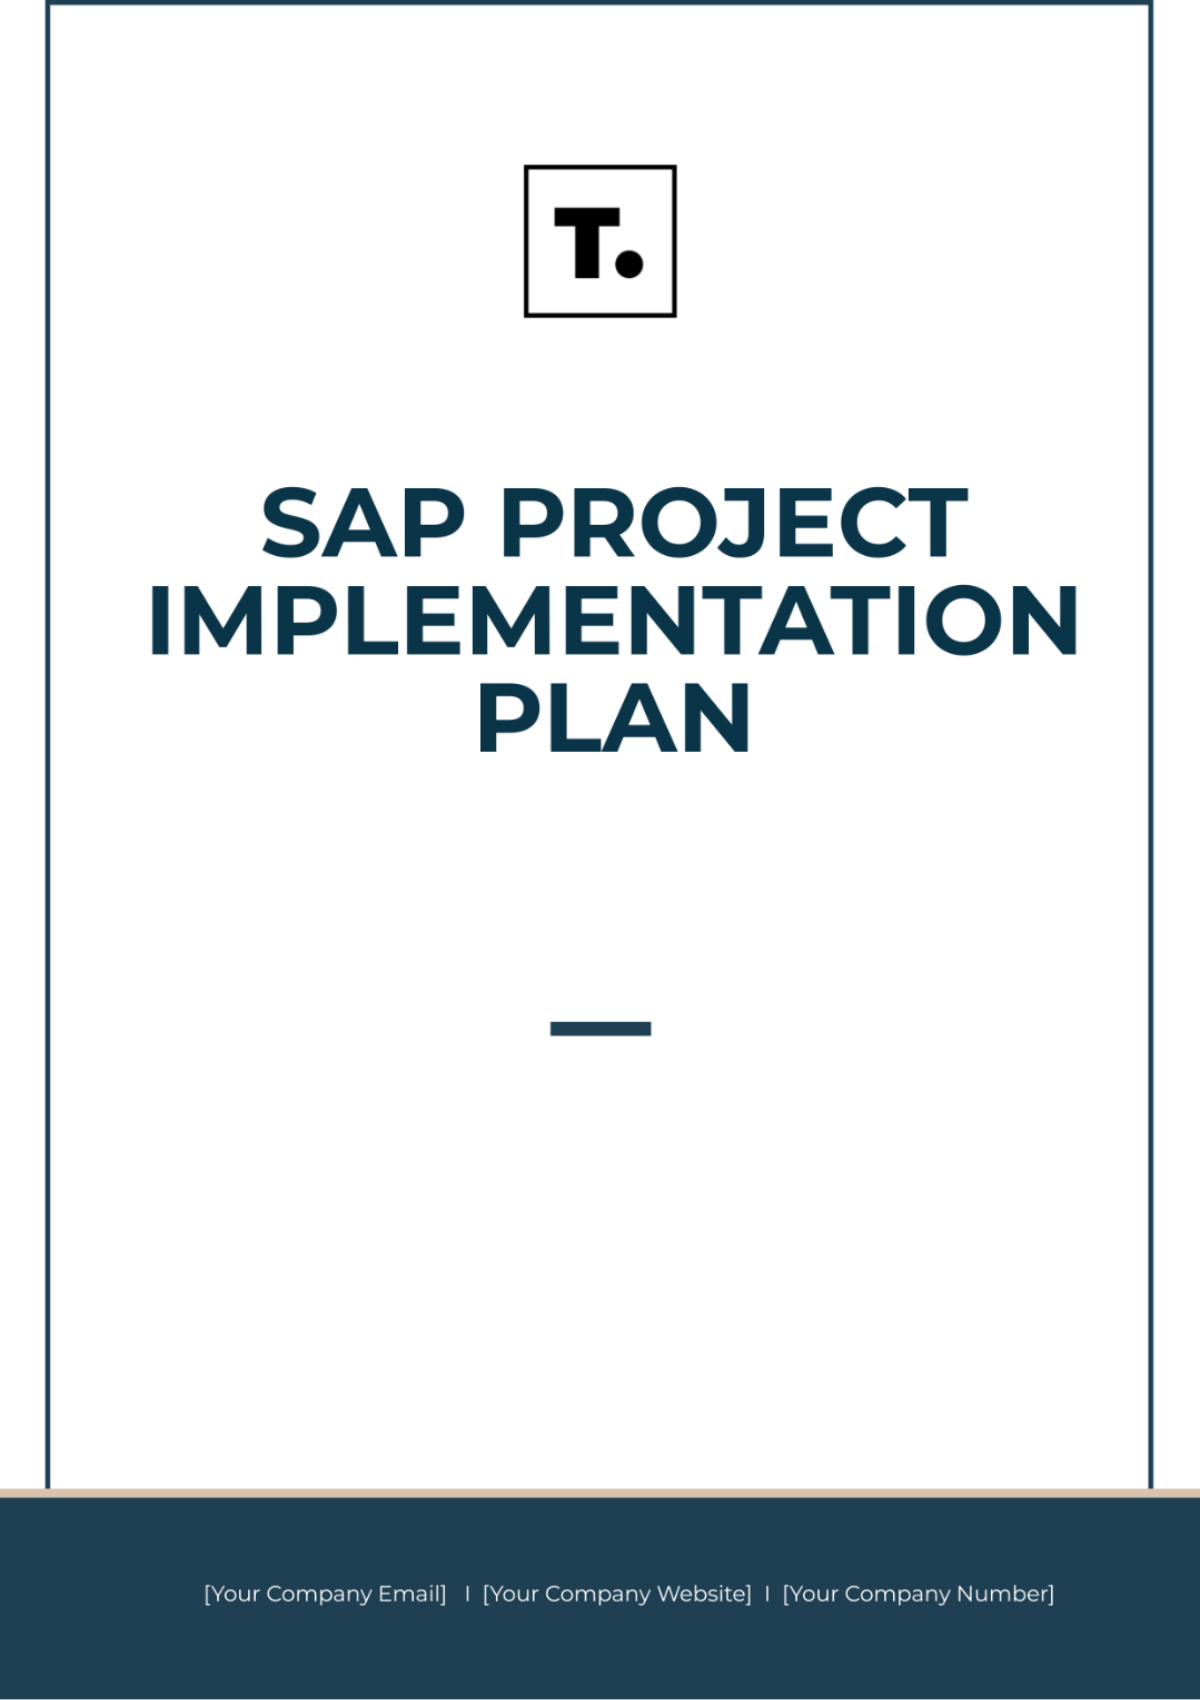 SAP Project Implementation Plan Template